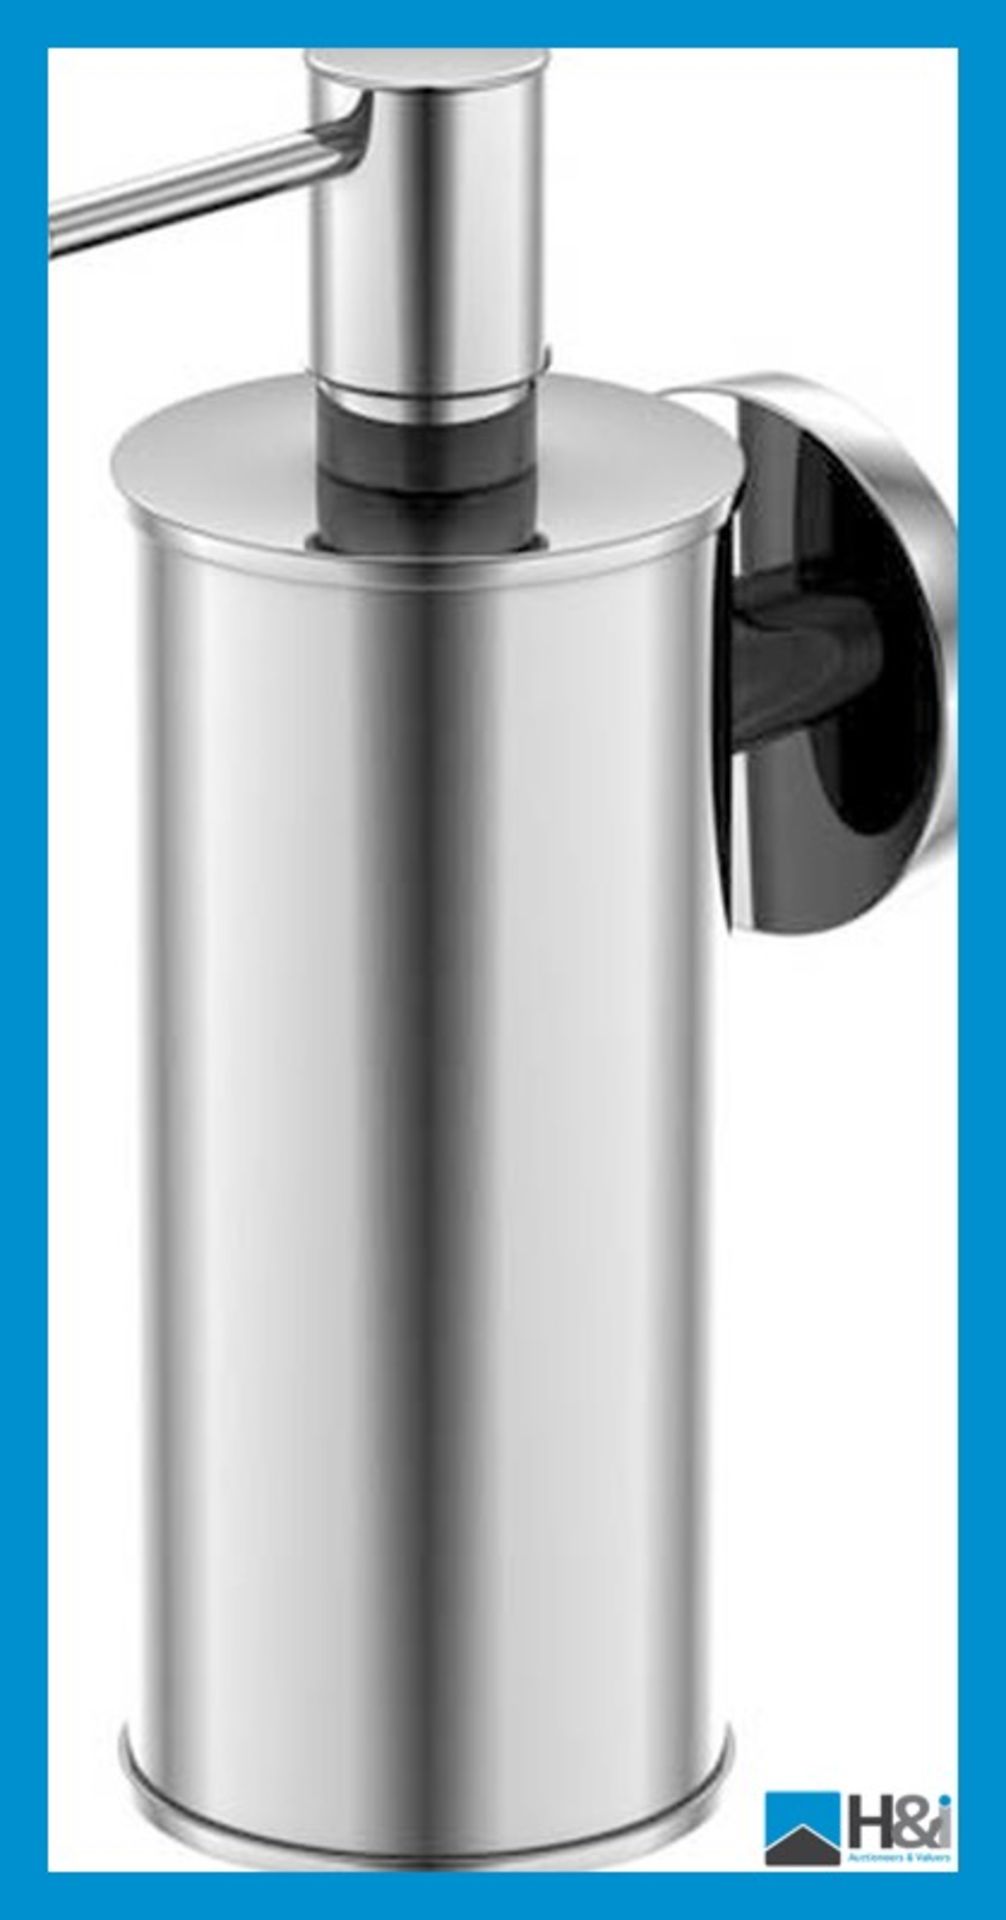 Steinberg Soap Dispenser in Polished Chrome. 650.8000, RRP £146.10 Brand New in Box Appraisal: